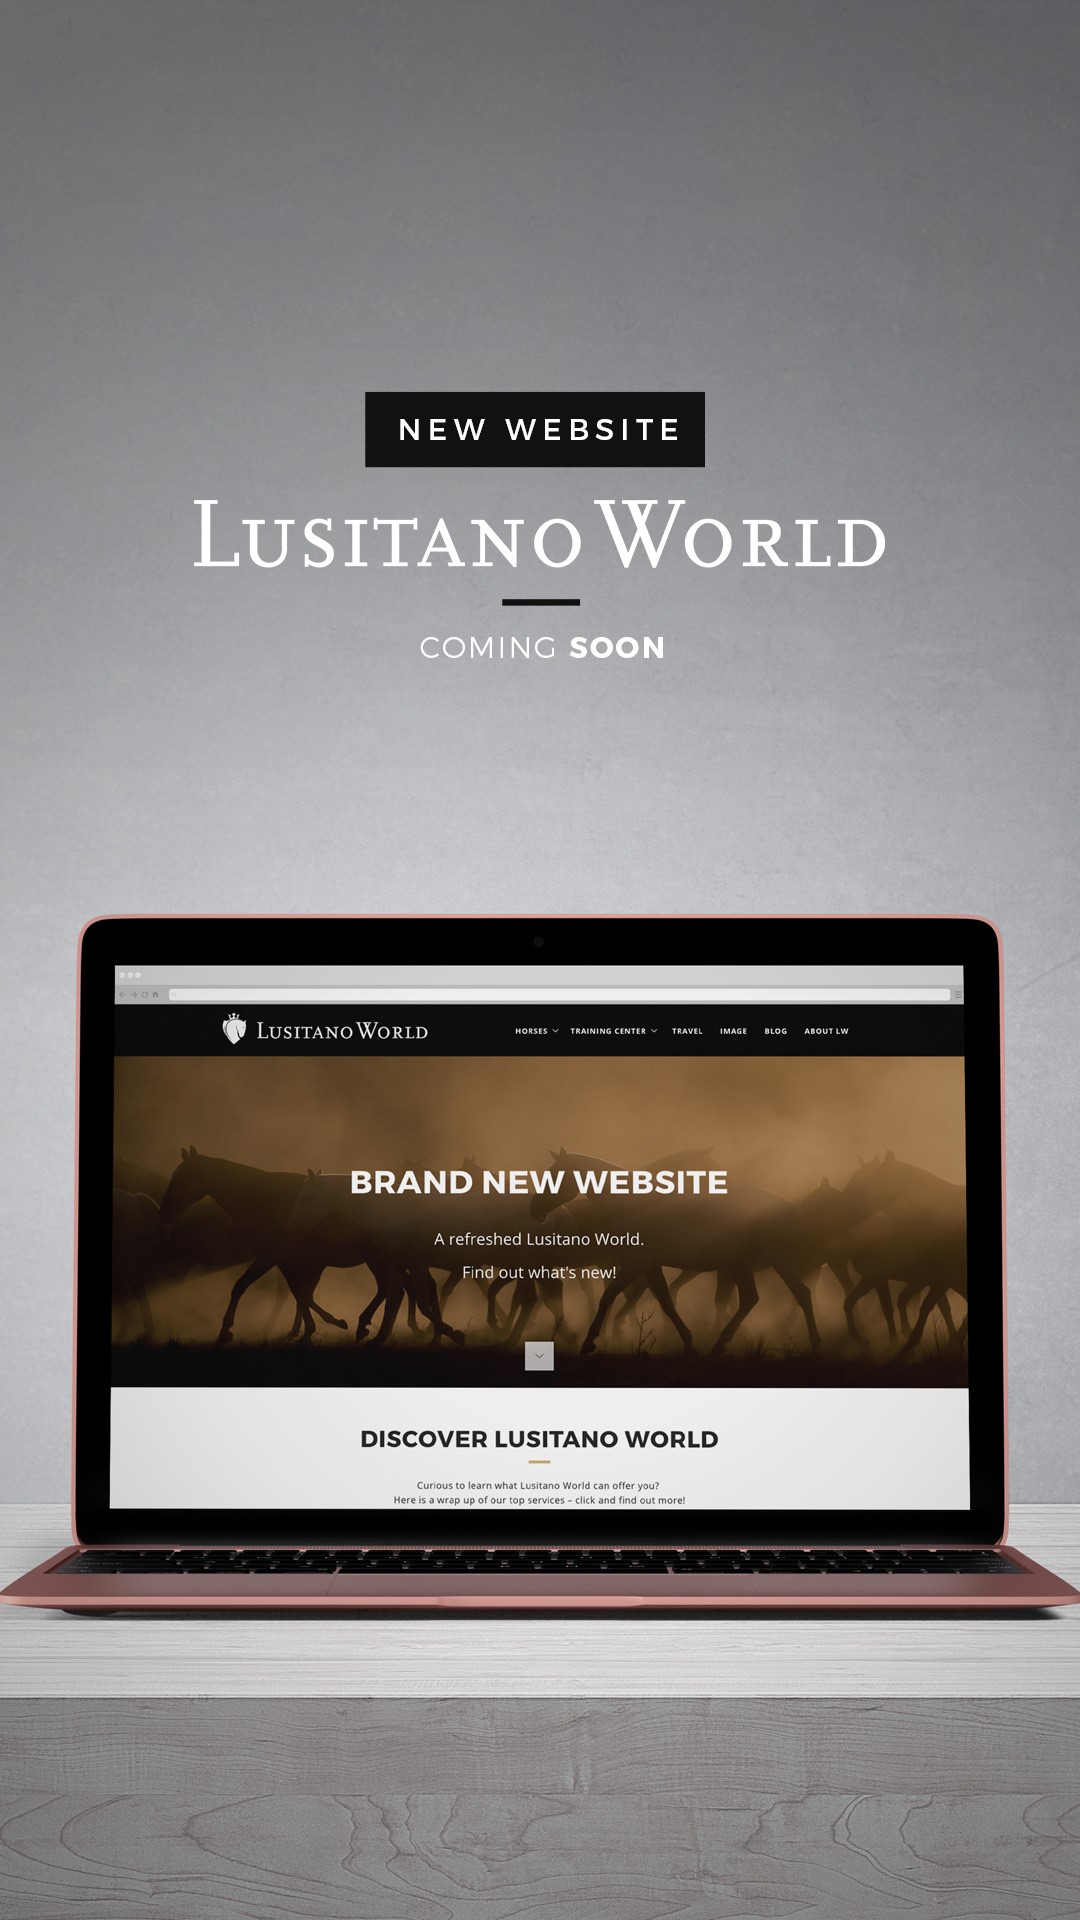 Renewed Lusitano World